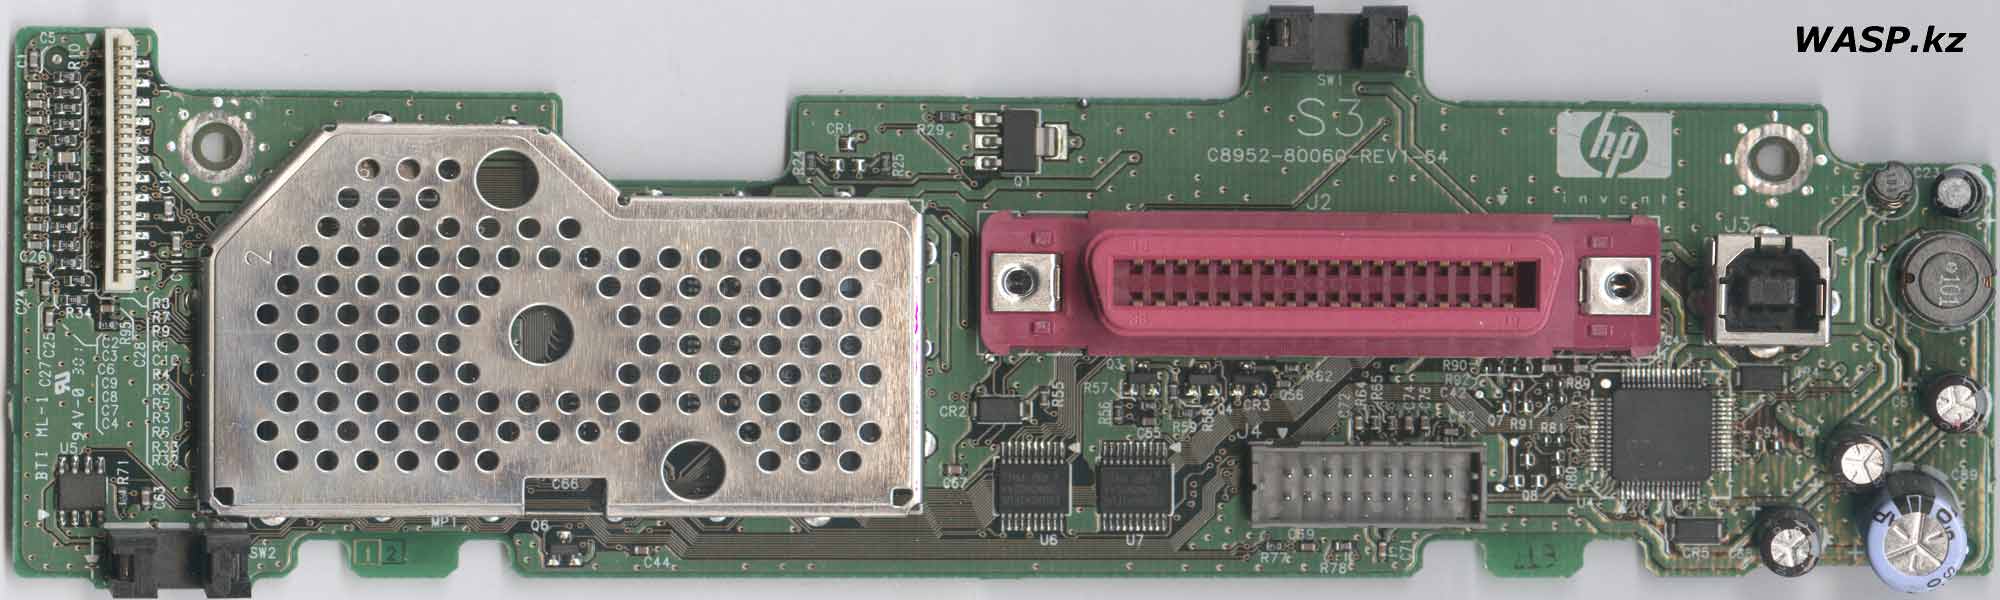 C8952-80060-REV1-54 схема HP Deskjet 3820